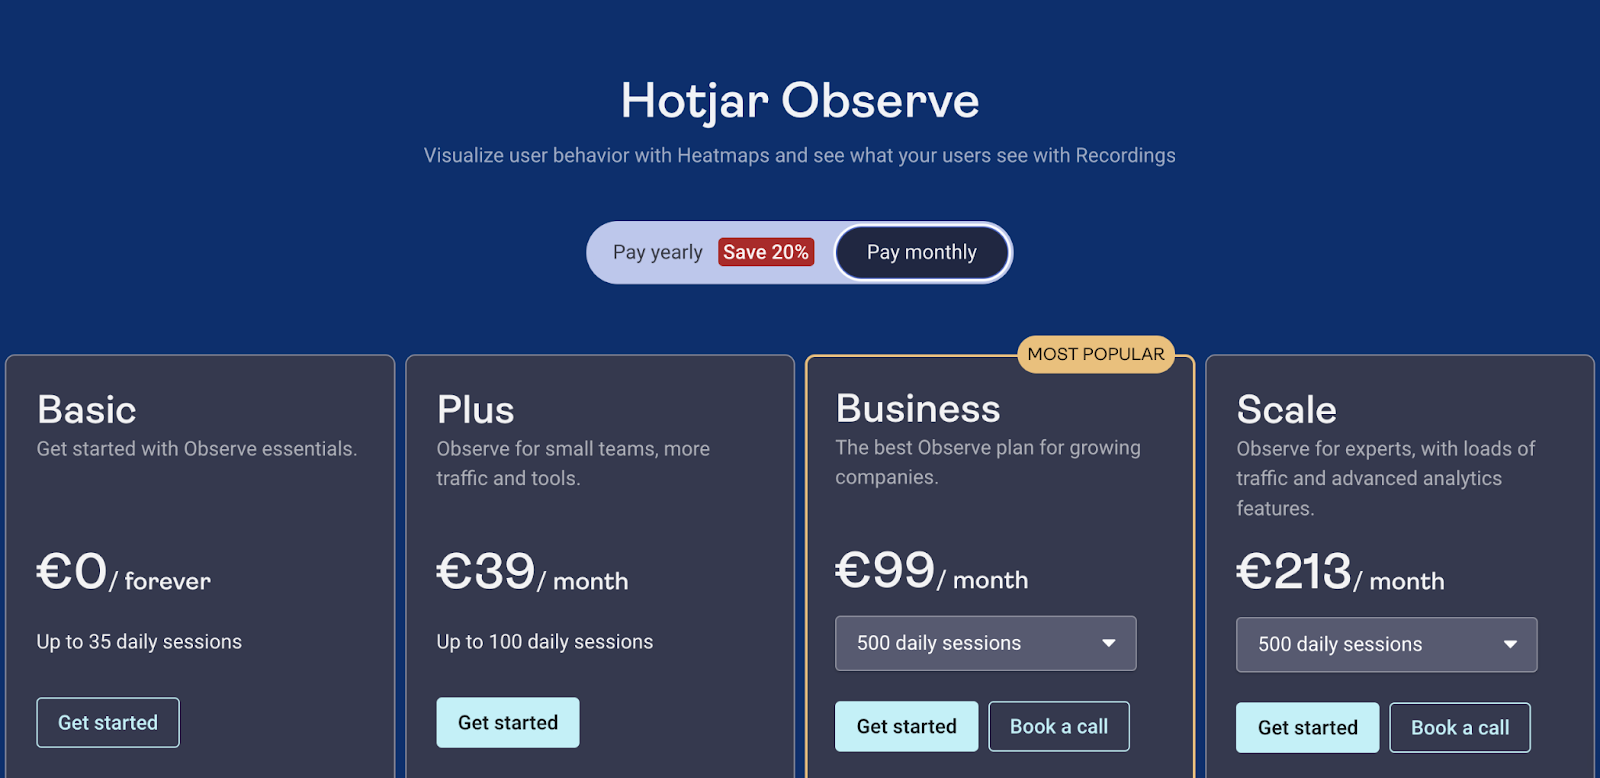 Hotjar Observe pricing